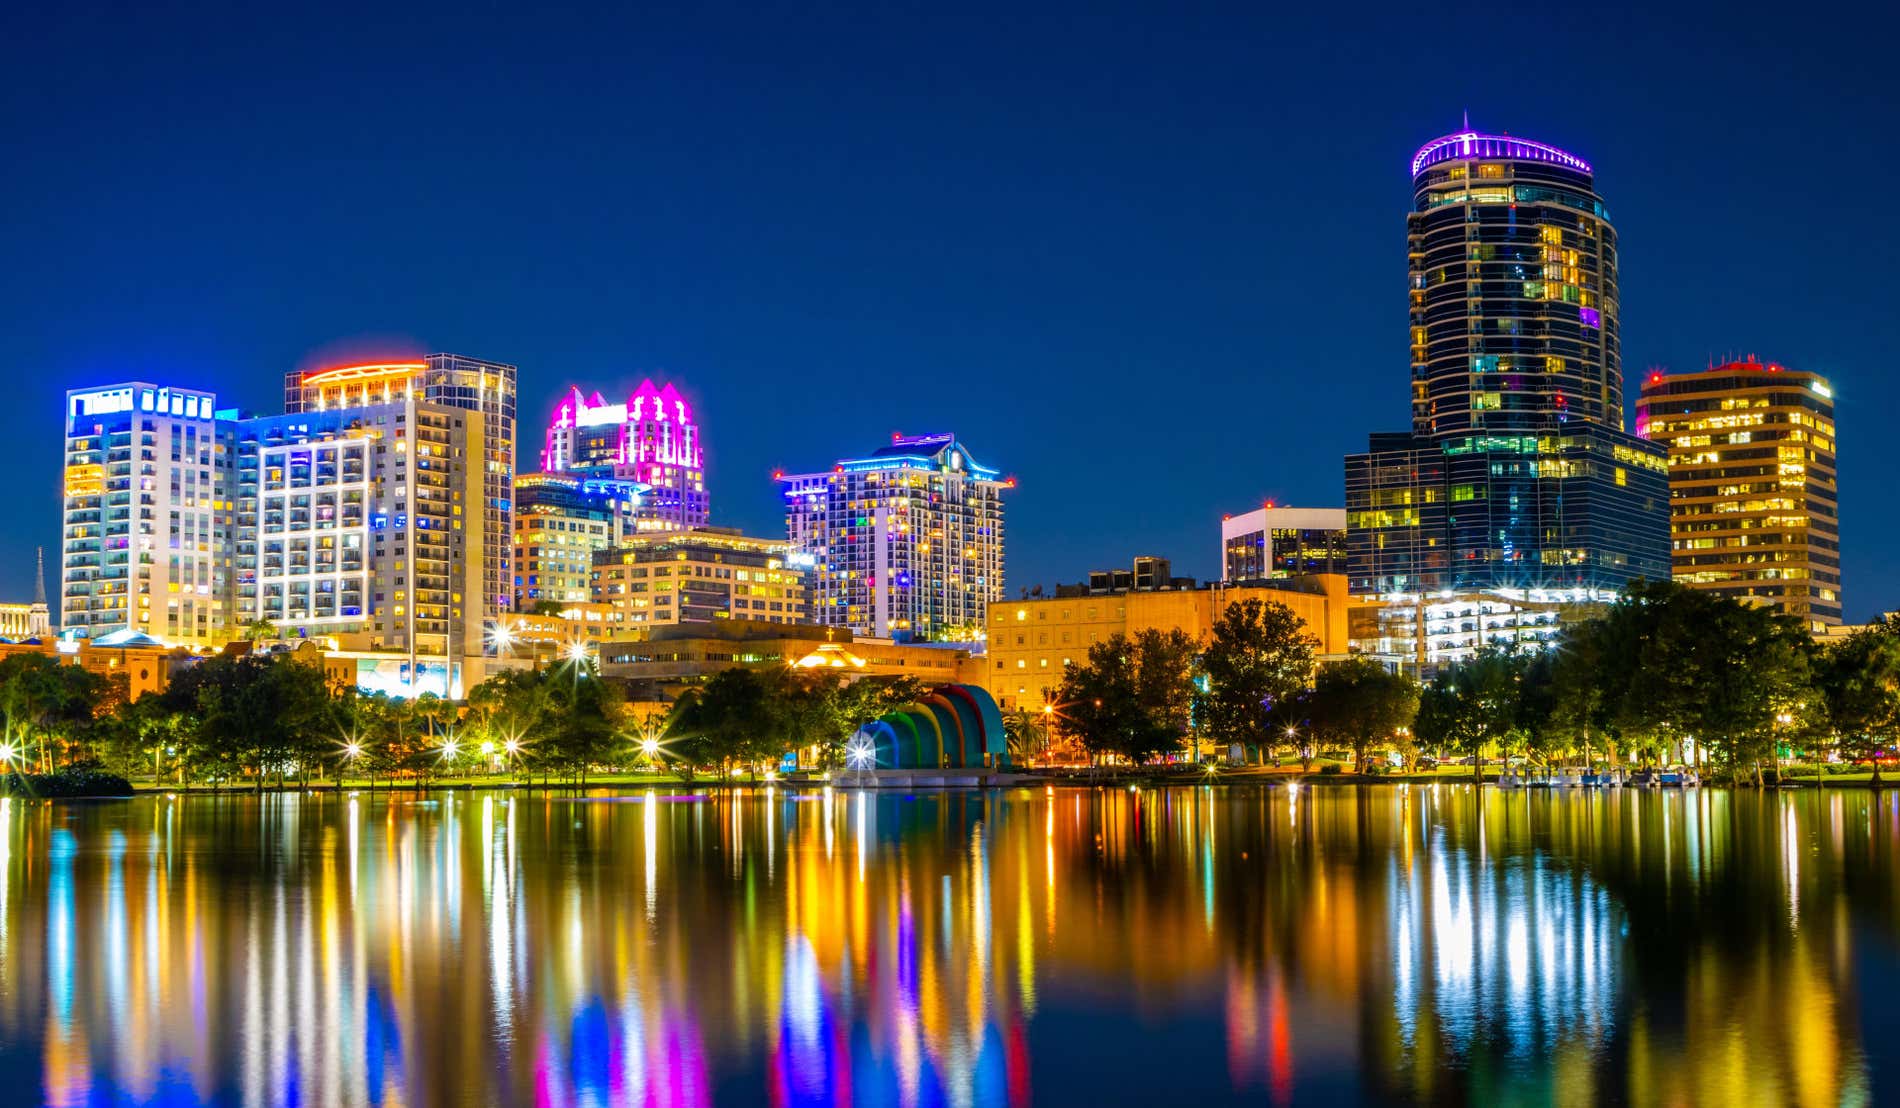 Orlando, More than Just Amusement Parks